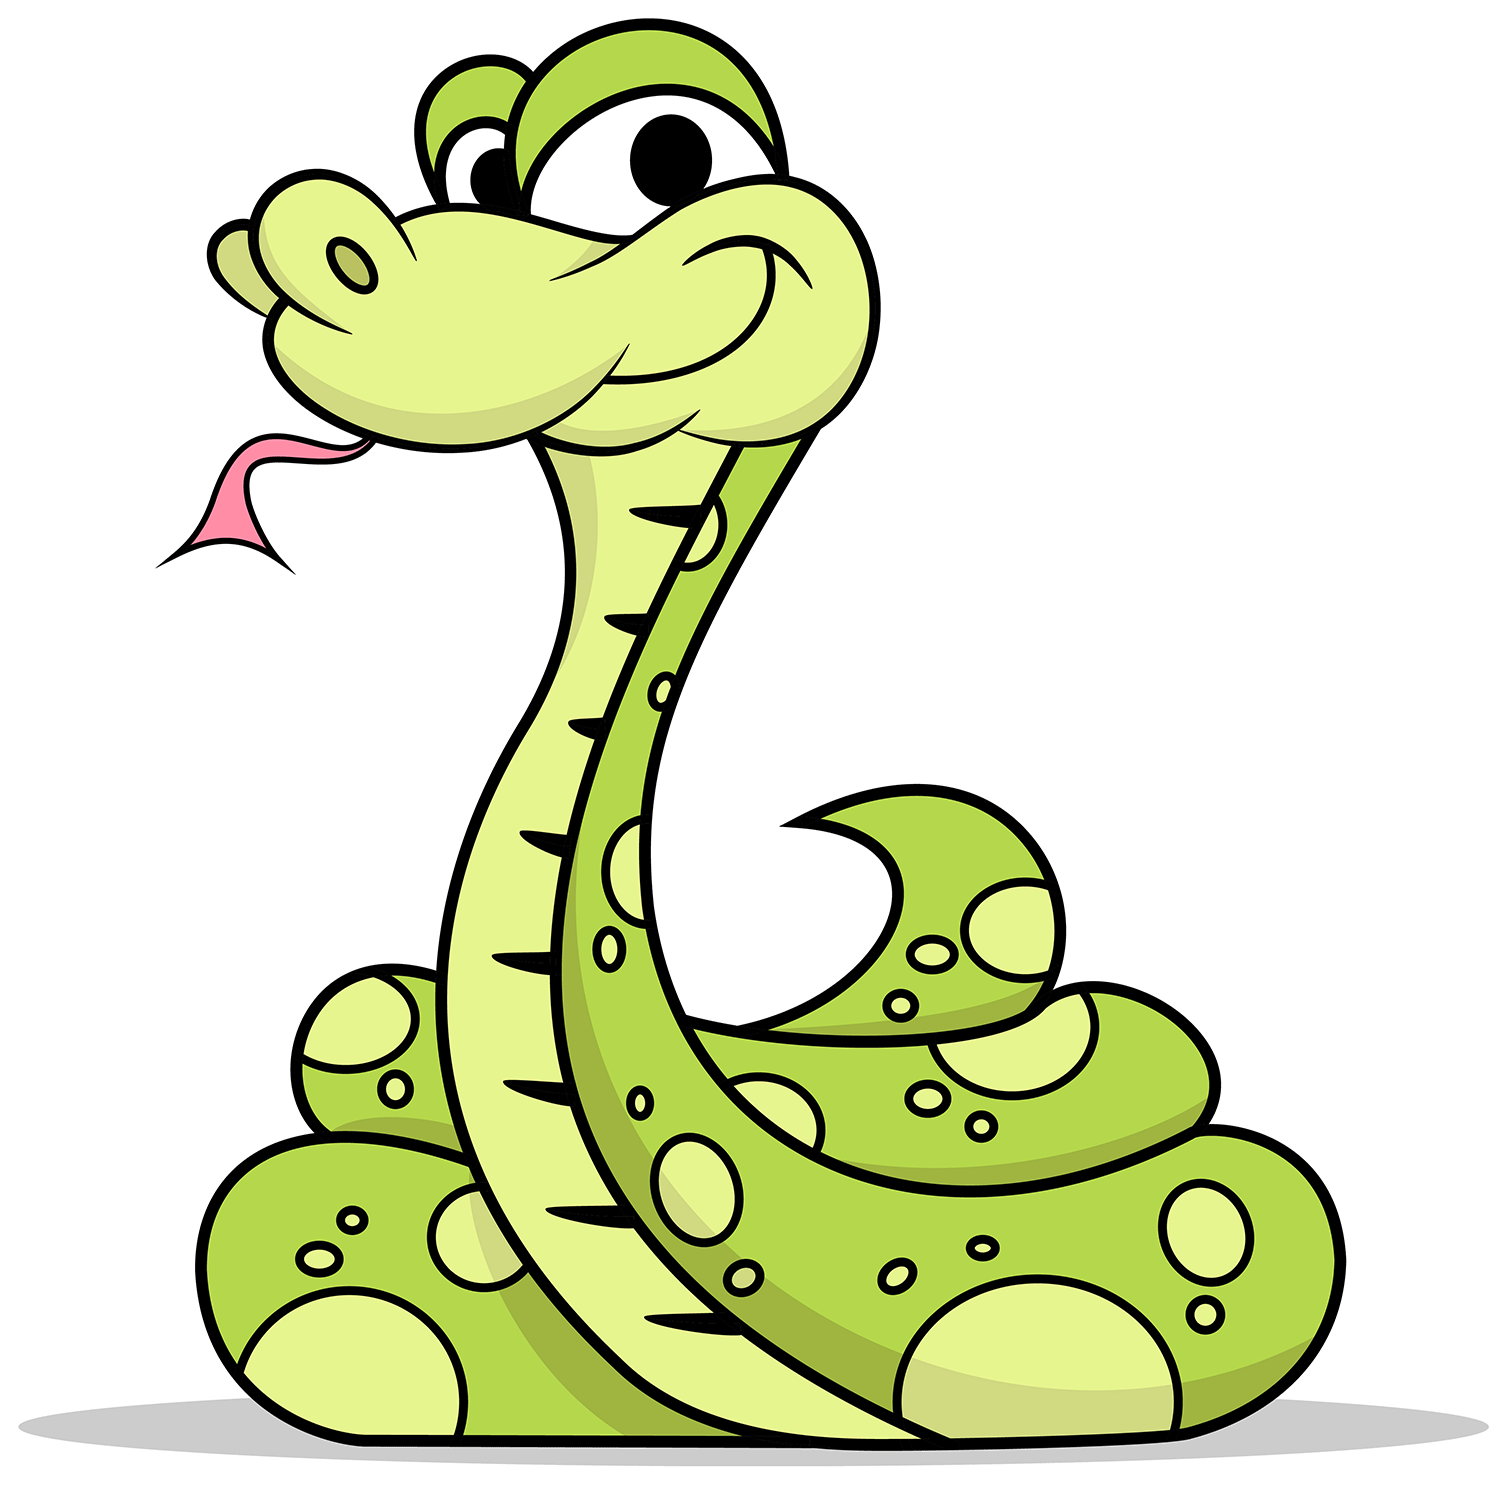 Cartoon snake clipart 